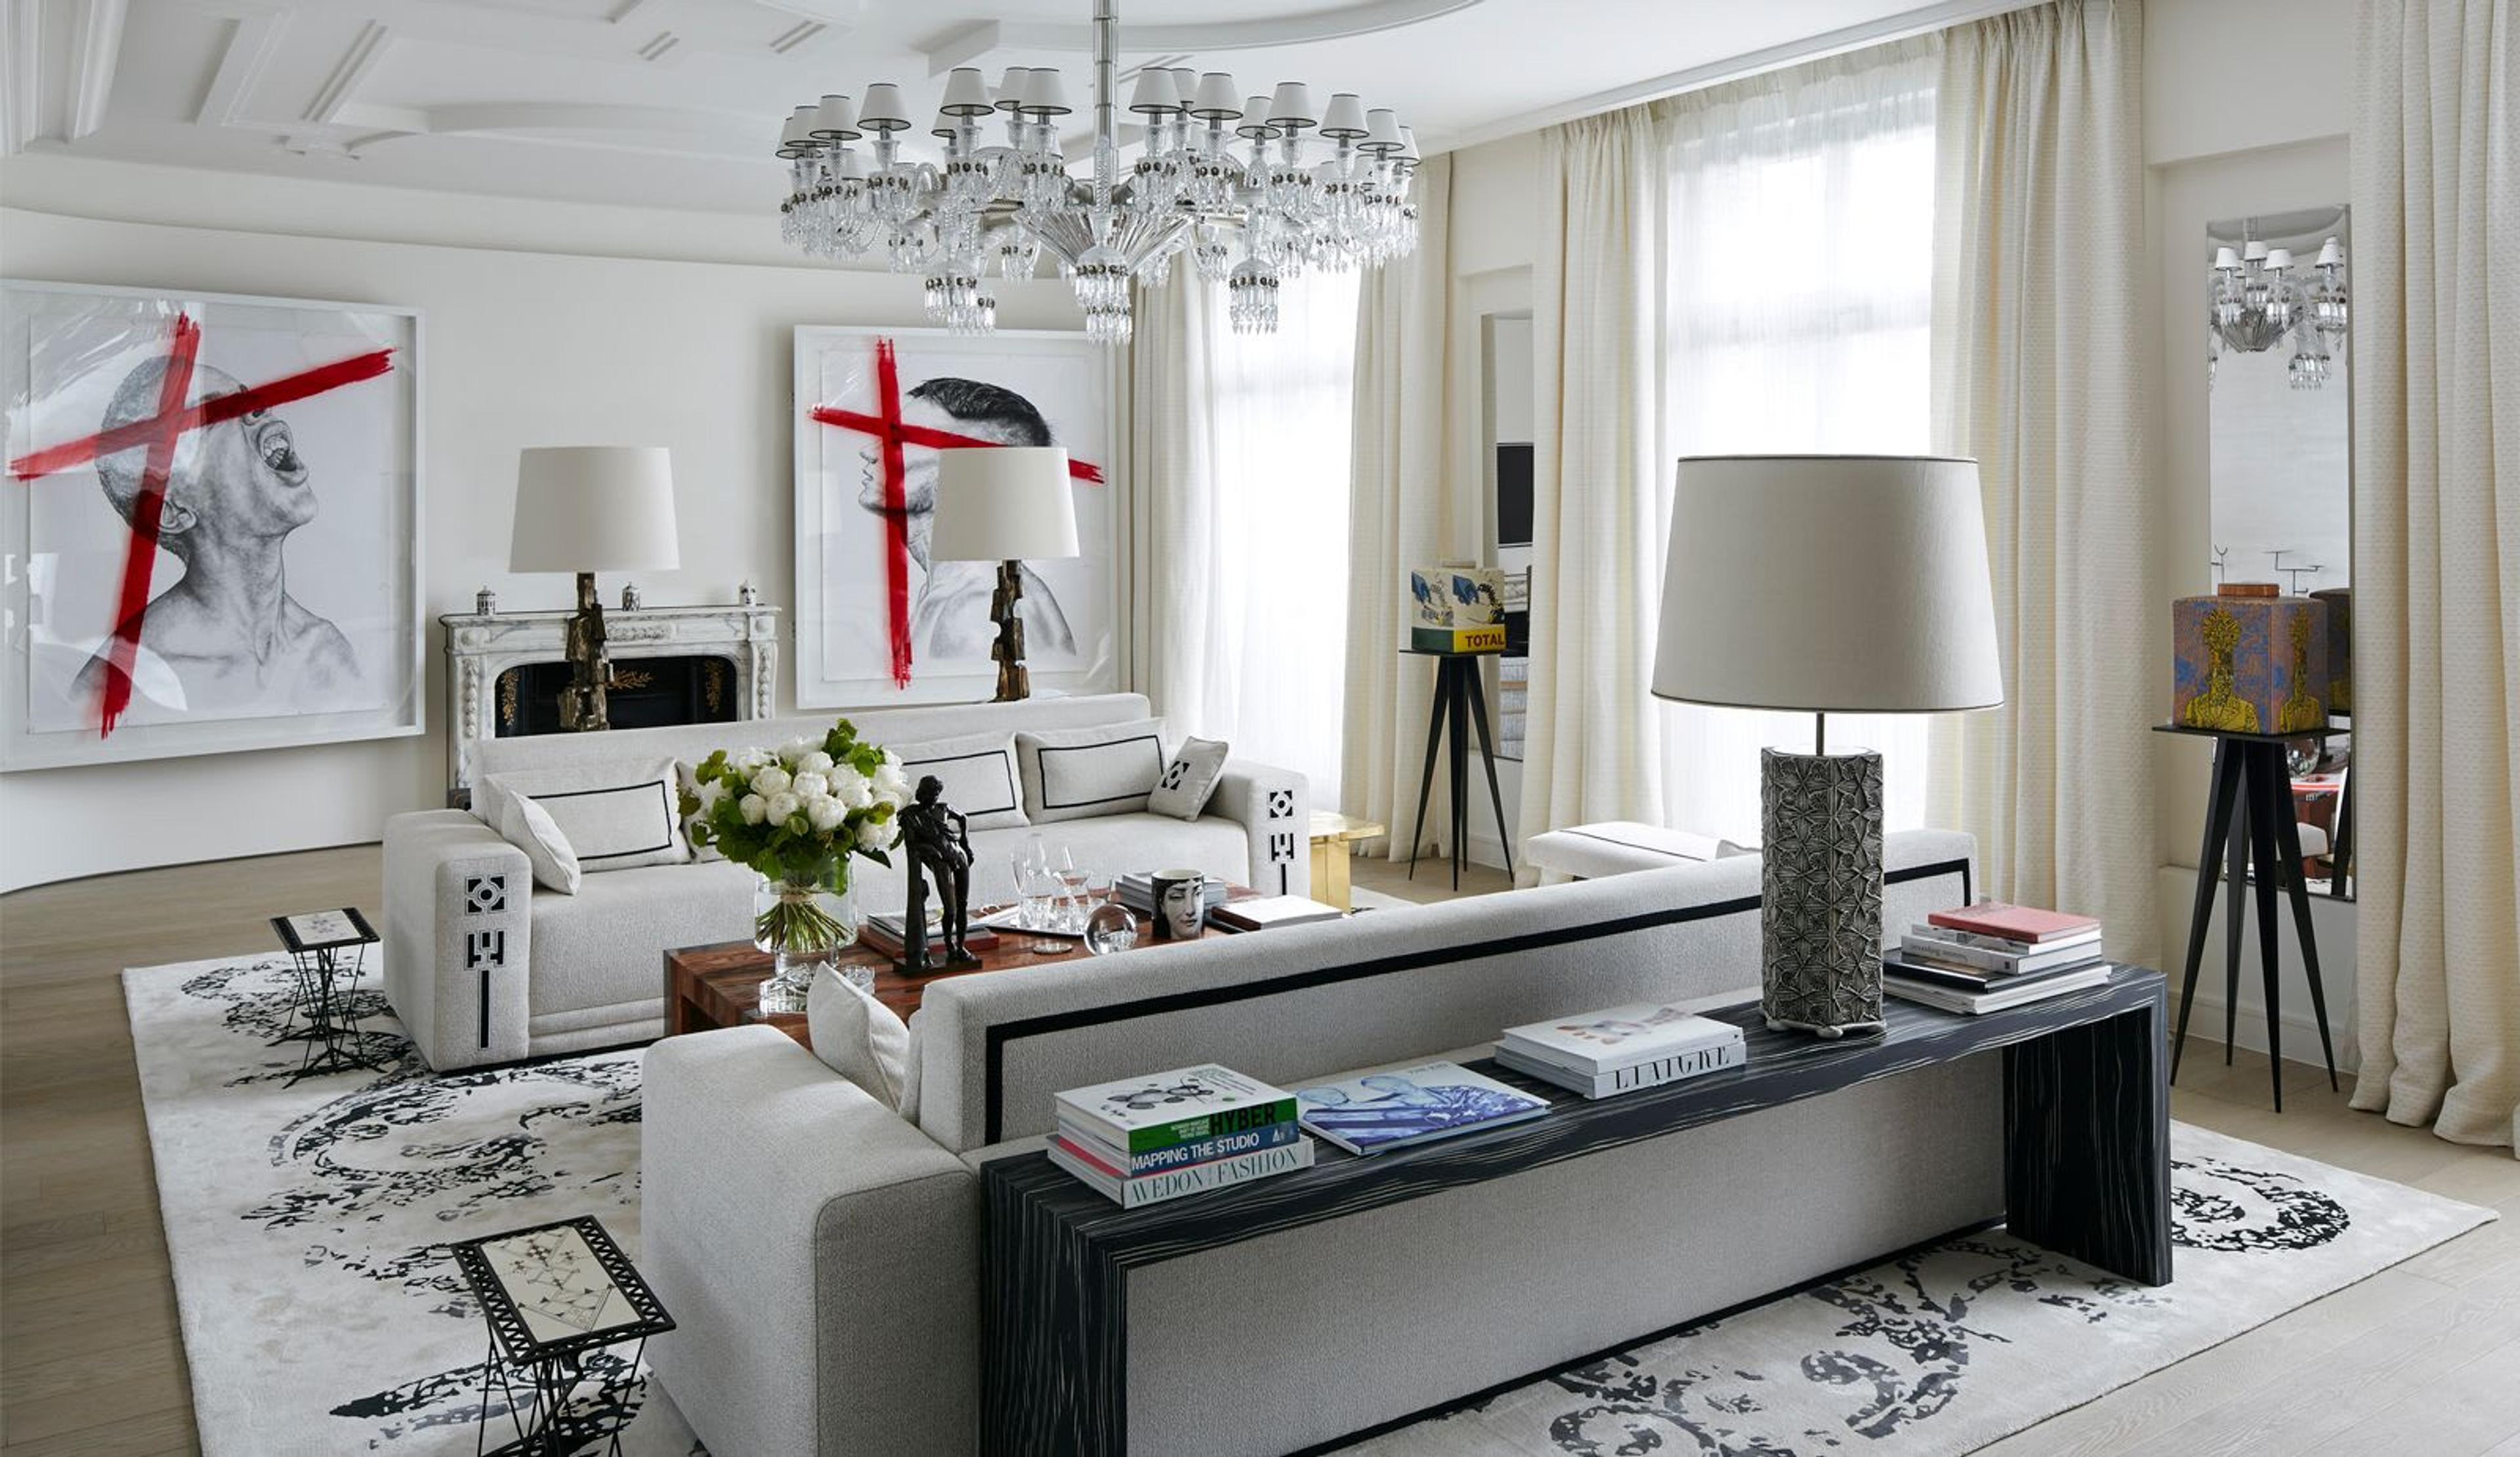 Living room by Stephanie Coutas, Place des Etats Unis, Paris. Photo by Francis Amiand